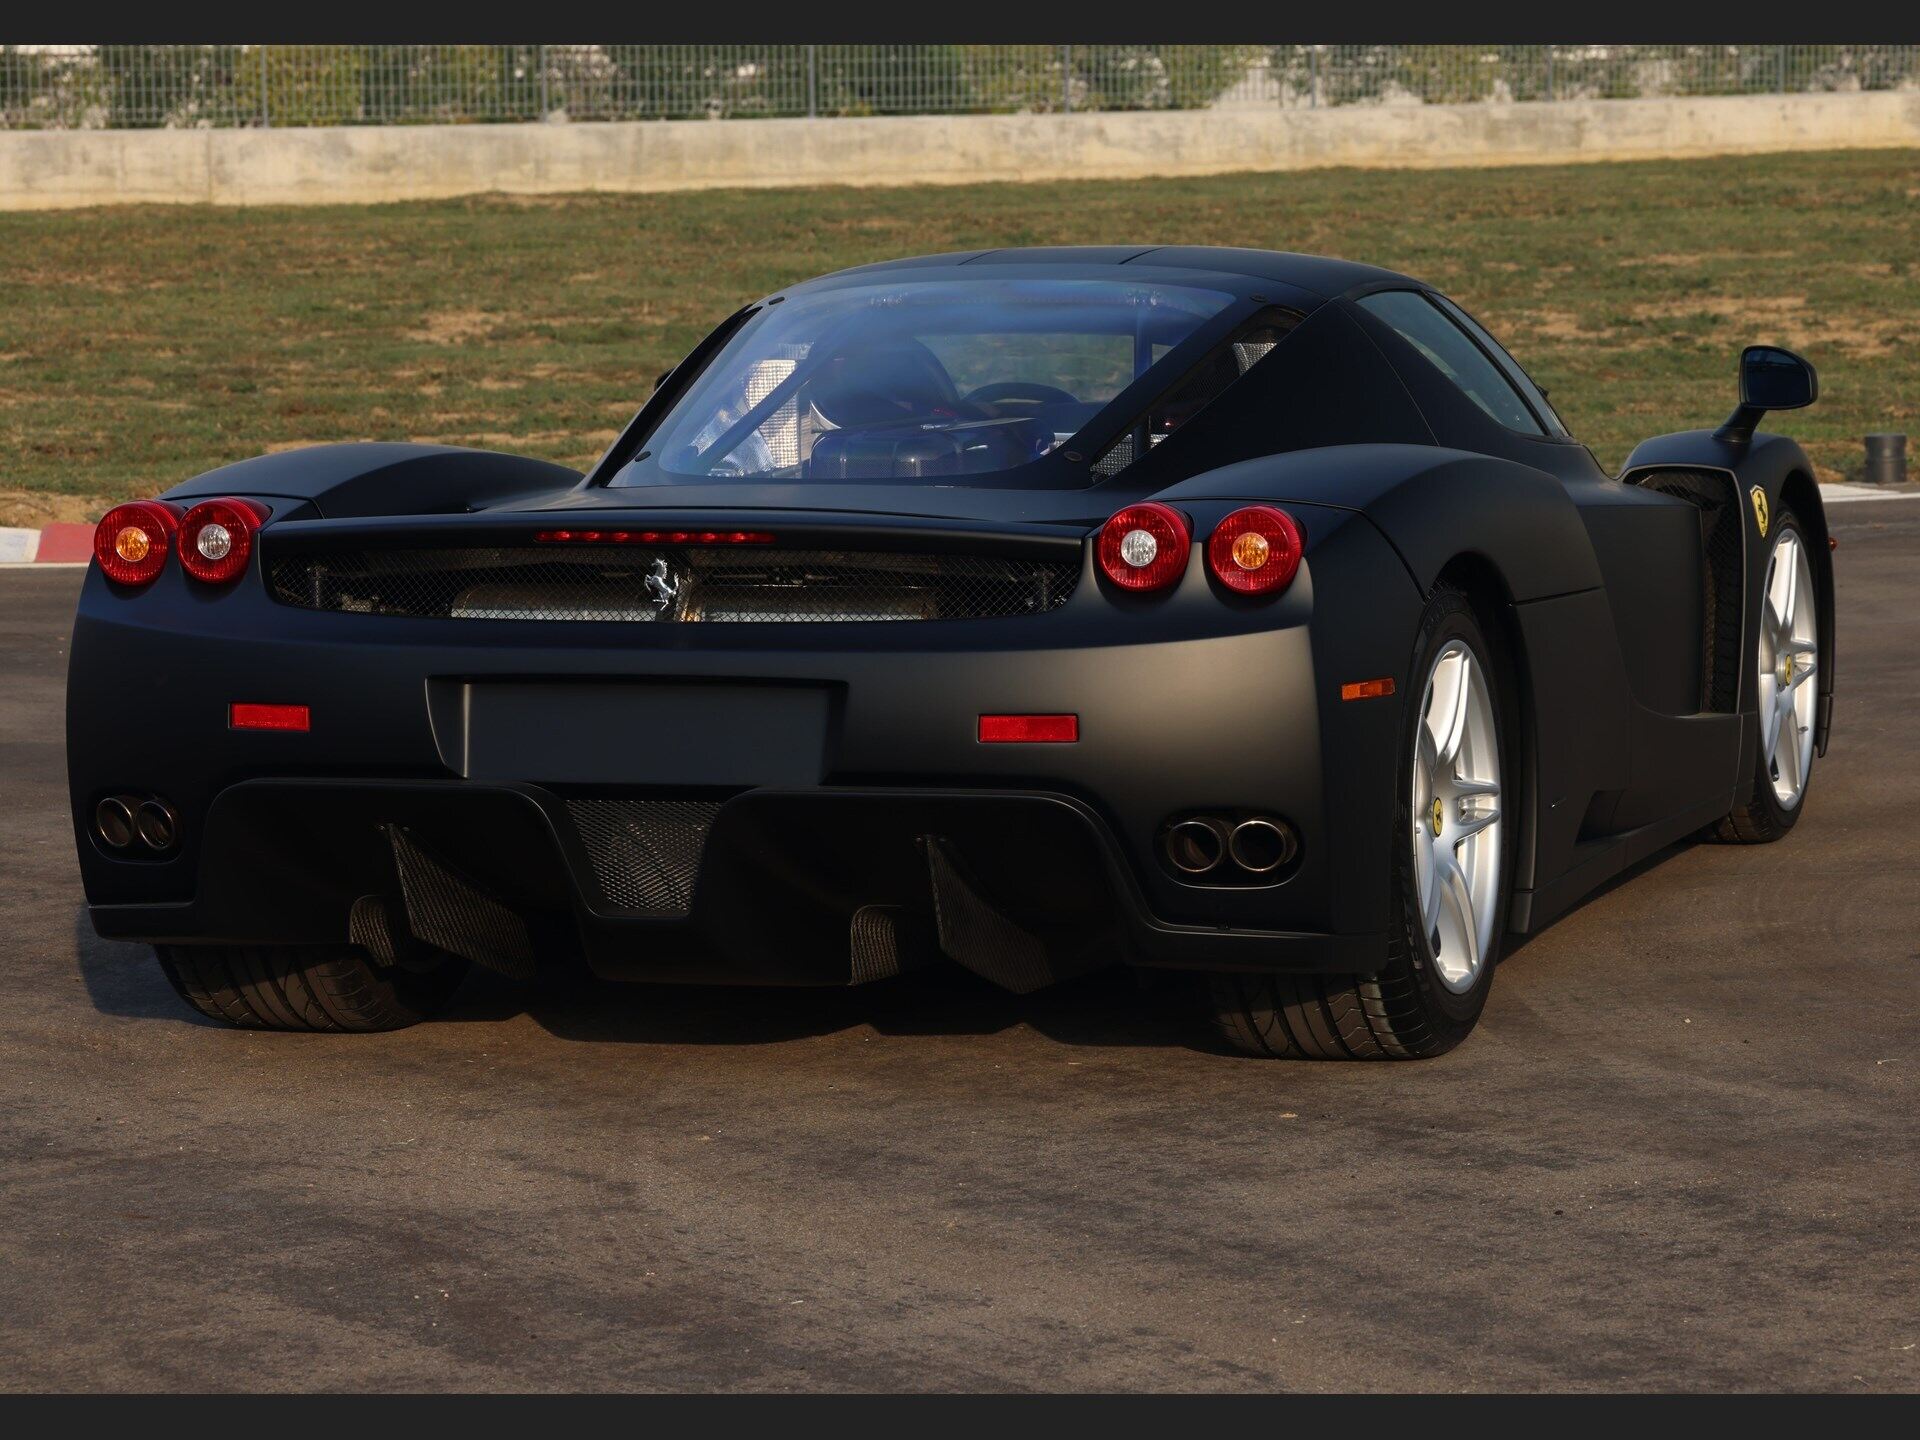 imagen 5 de Sale a subasta un Ferrari Enzo negro mate único excepcional.